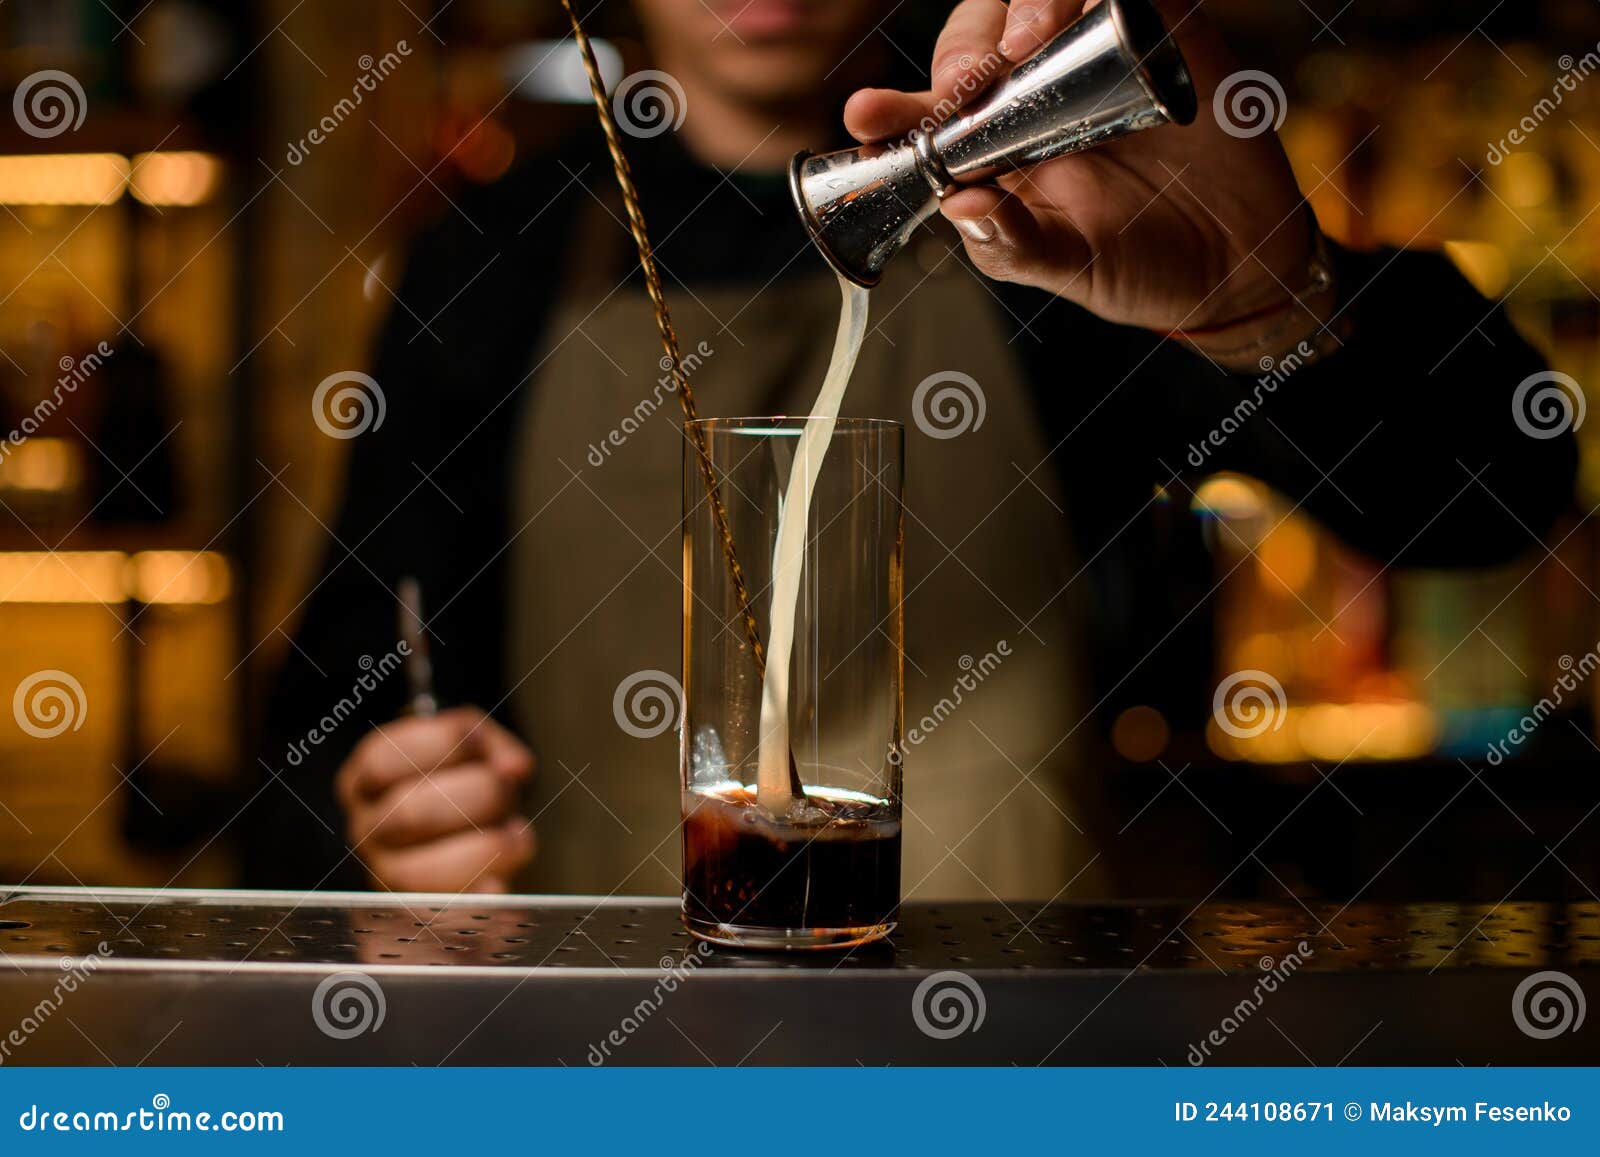 https://thumbs.dreamstime.com/z/liquor-poured-jigger-transparent-tall-glass-bar-counter-cocktail-preparation-process-244108671.jpg